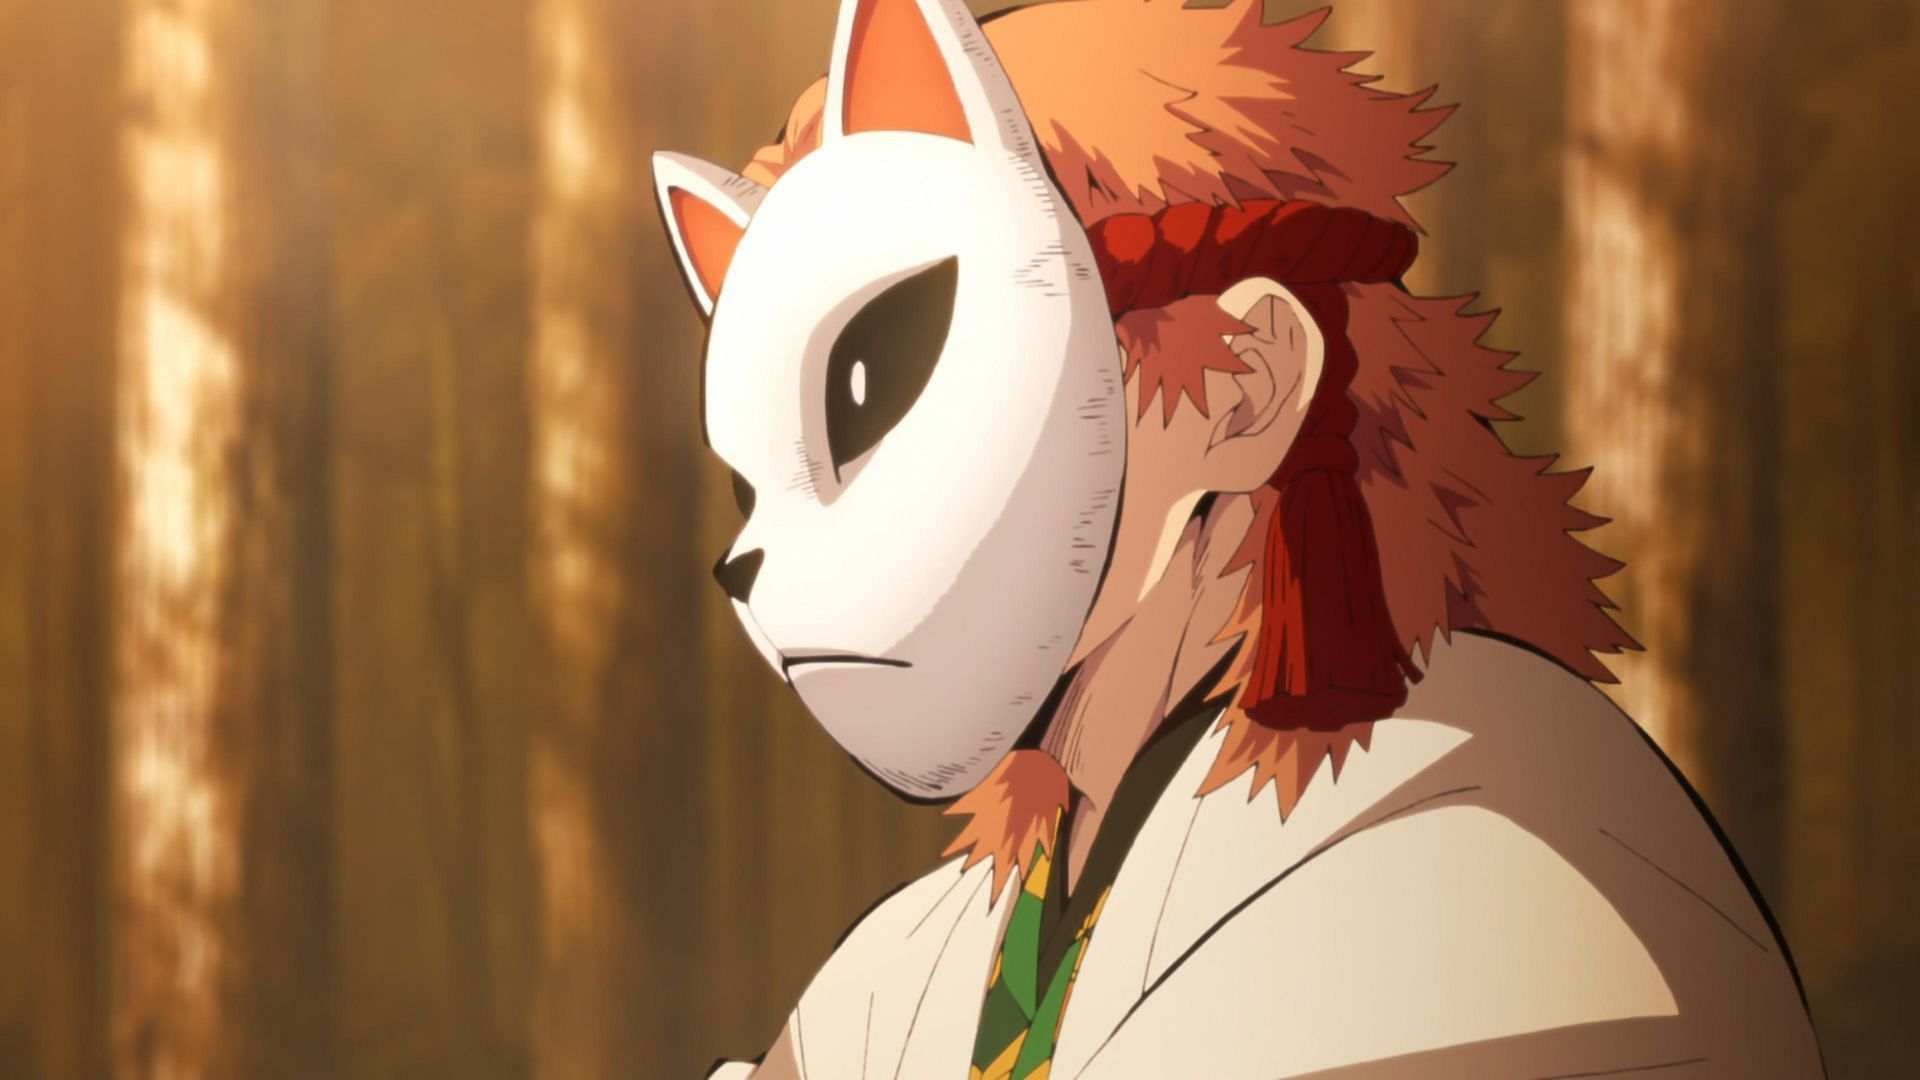 Sabito as seen in the anime series (Image via Ufotable)